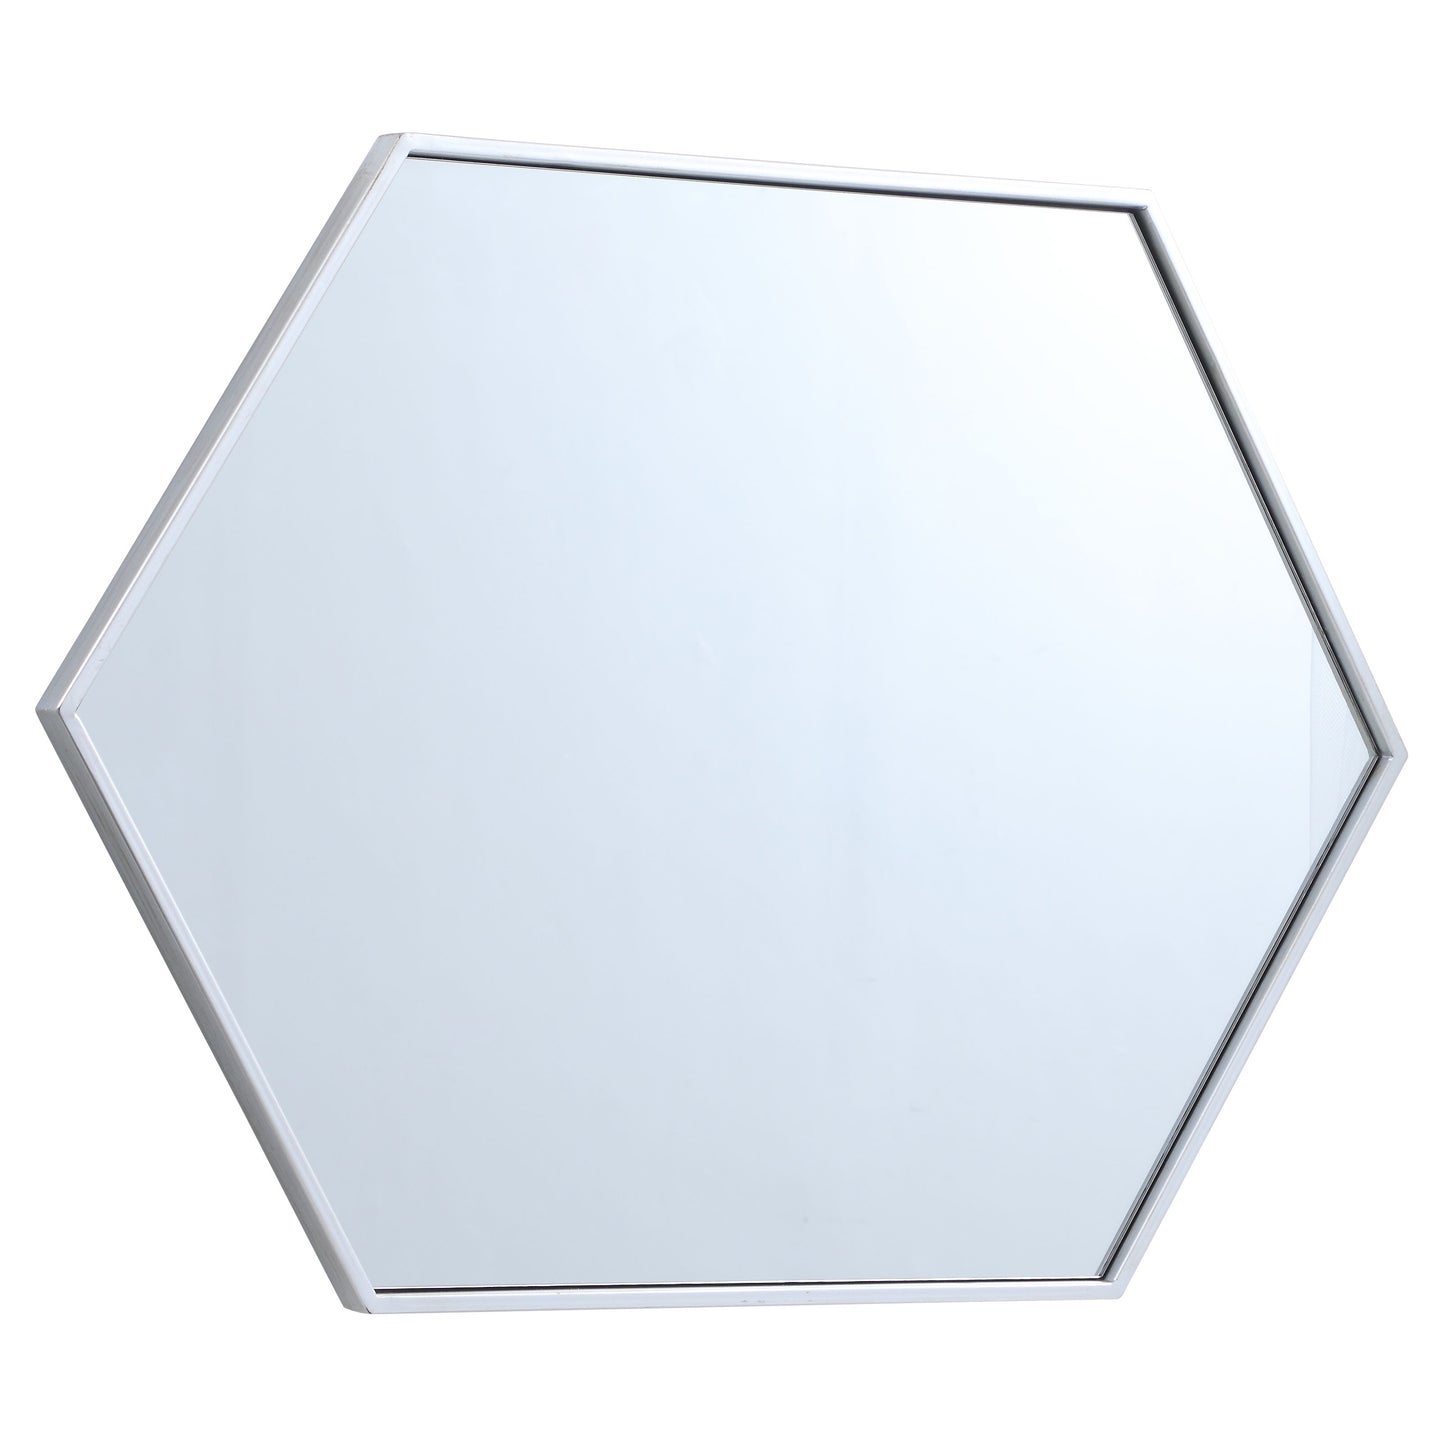 MR4424S Decker 24" x 34" Metal Framed Hexagon Mirror in Silver